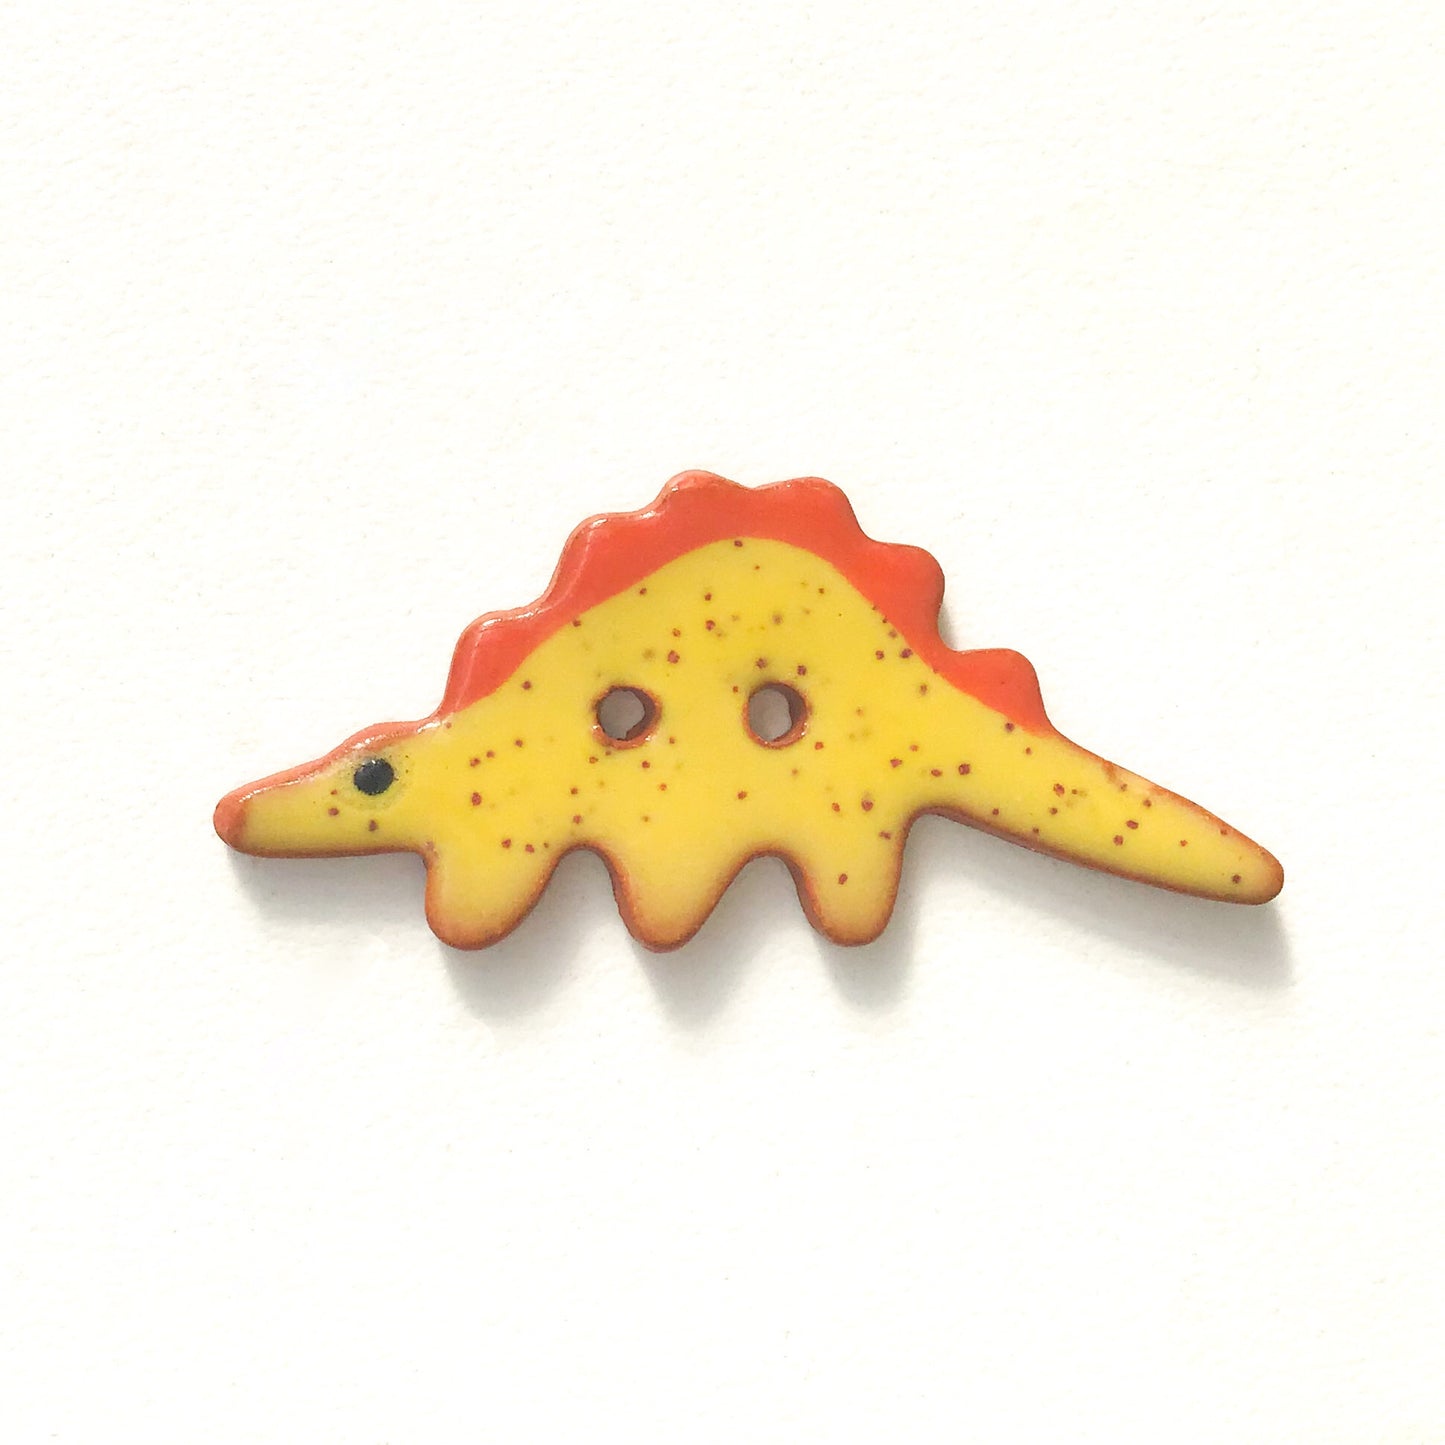 Stegosaurus Buttons - Ceramic Dinosaur Buttons - Children's Animal Buttons (ws-241)